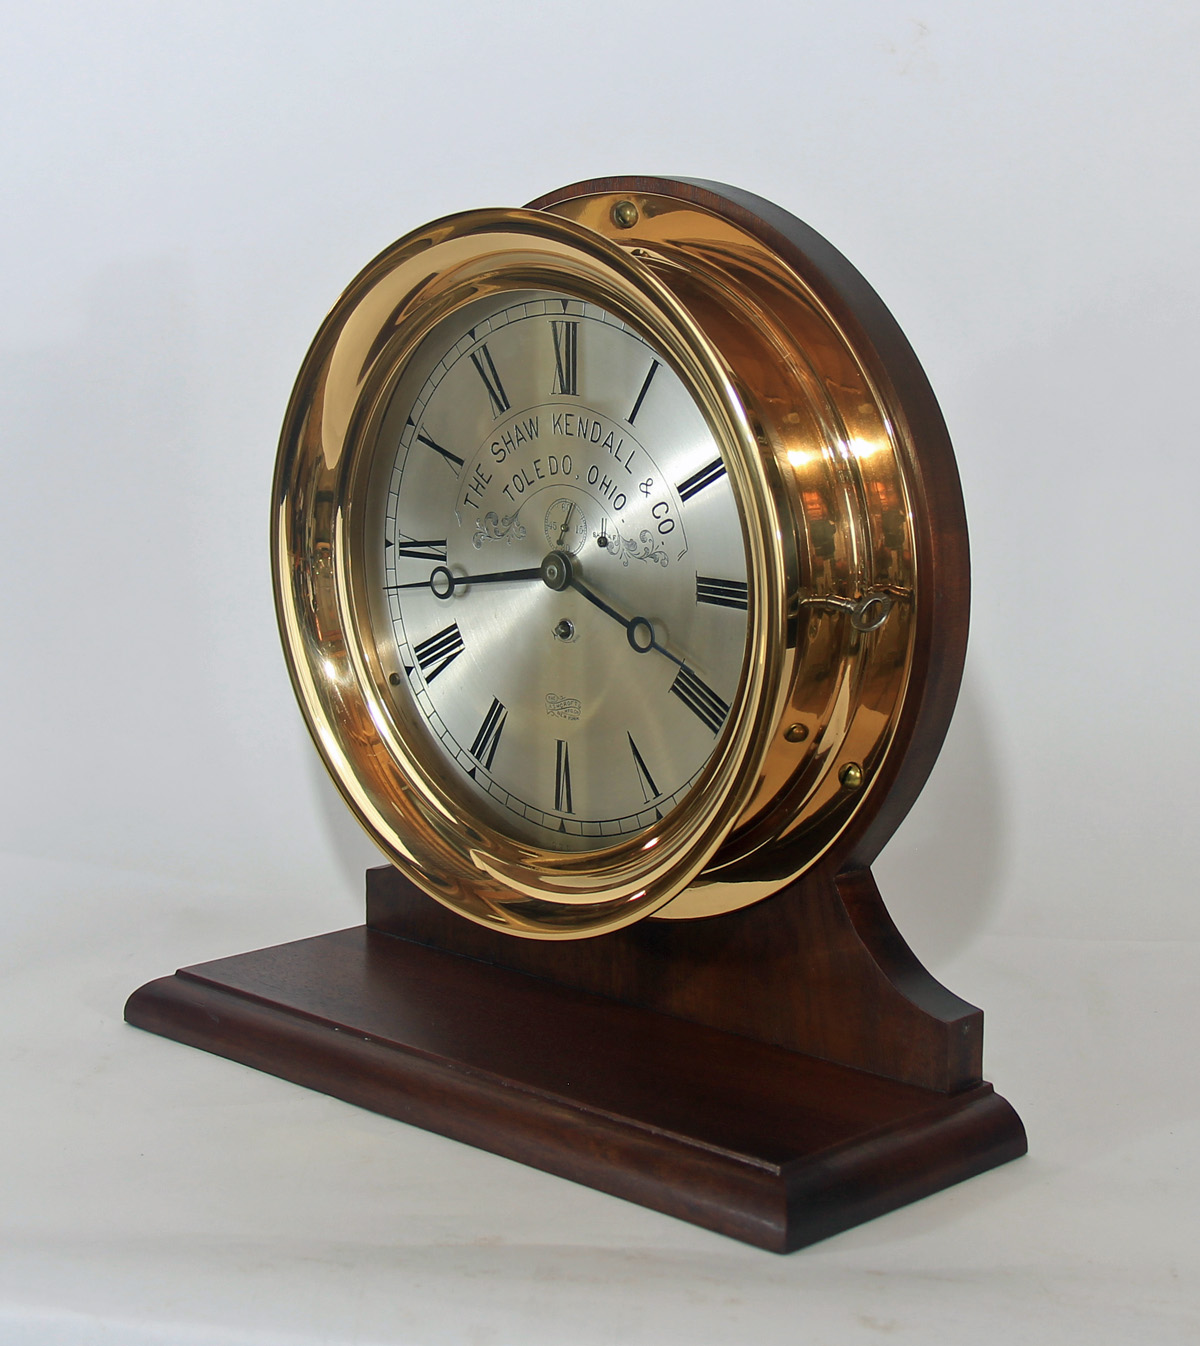 Eastman Clock C o. 10 inch Marine Clock for Shaw Kendall & Co.